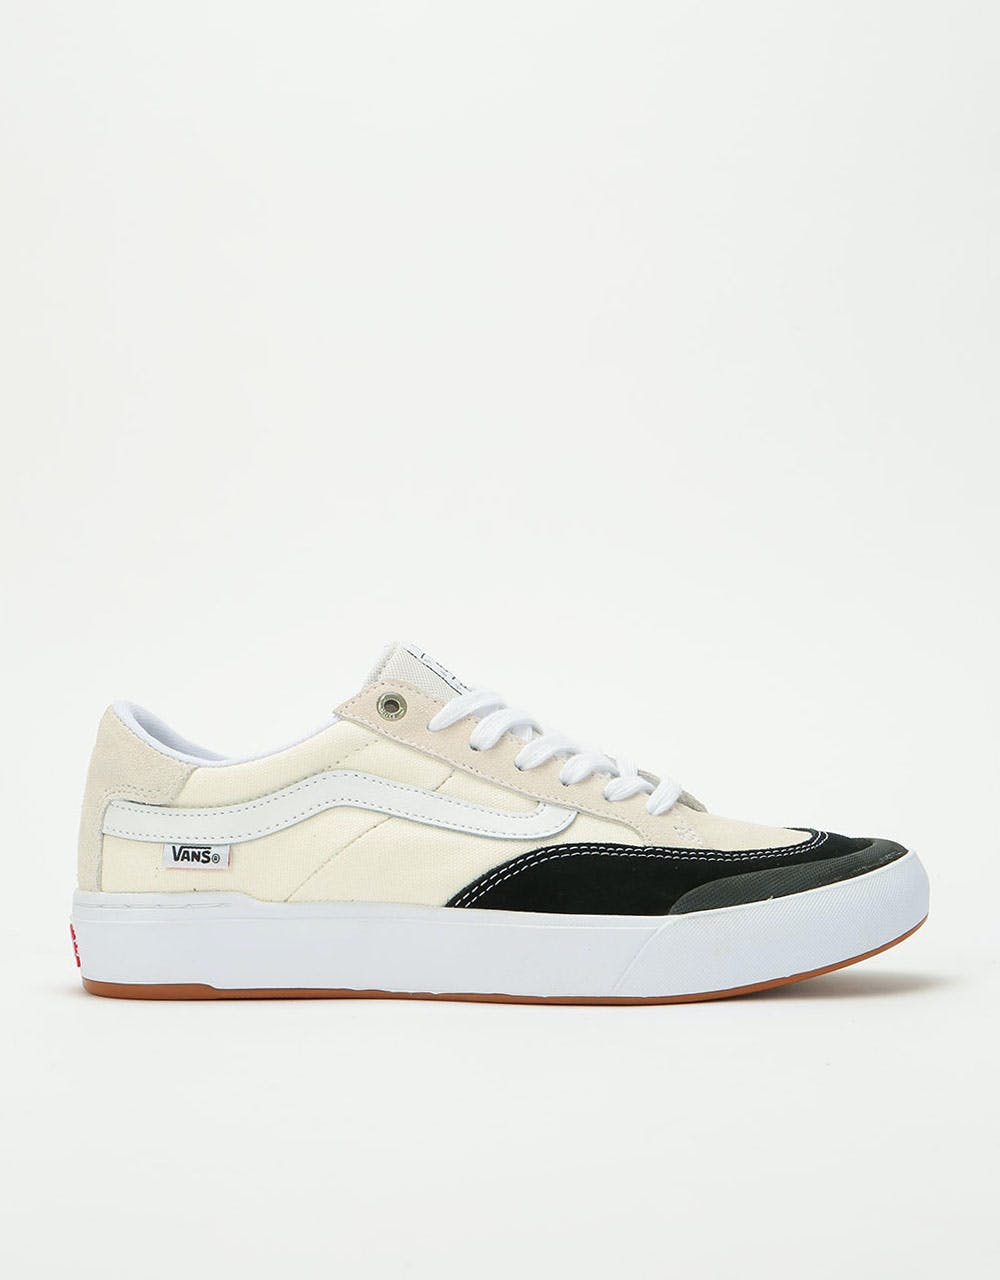 Vans Berle Pro Skate Shoes - Marshmallow/Black